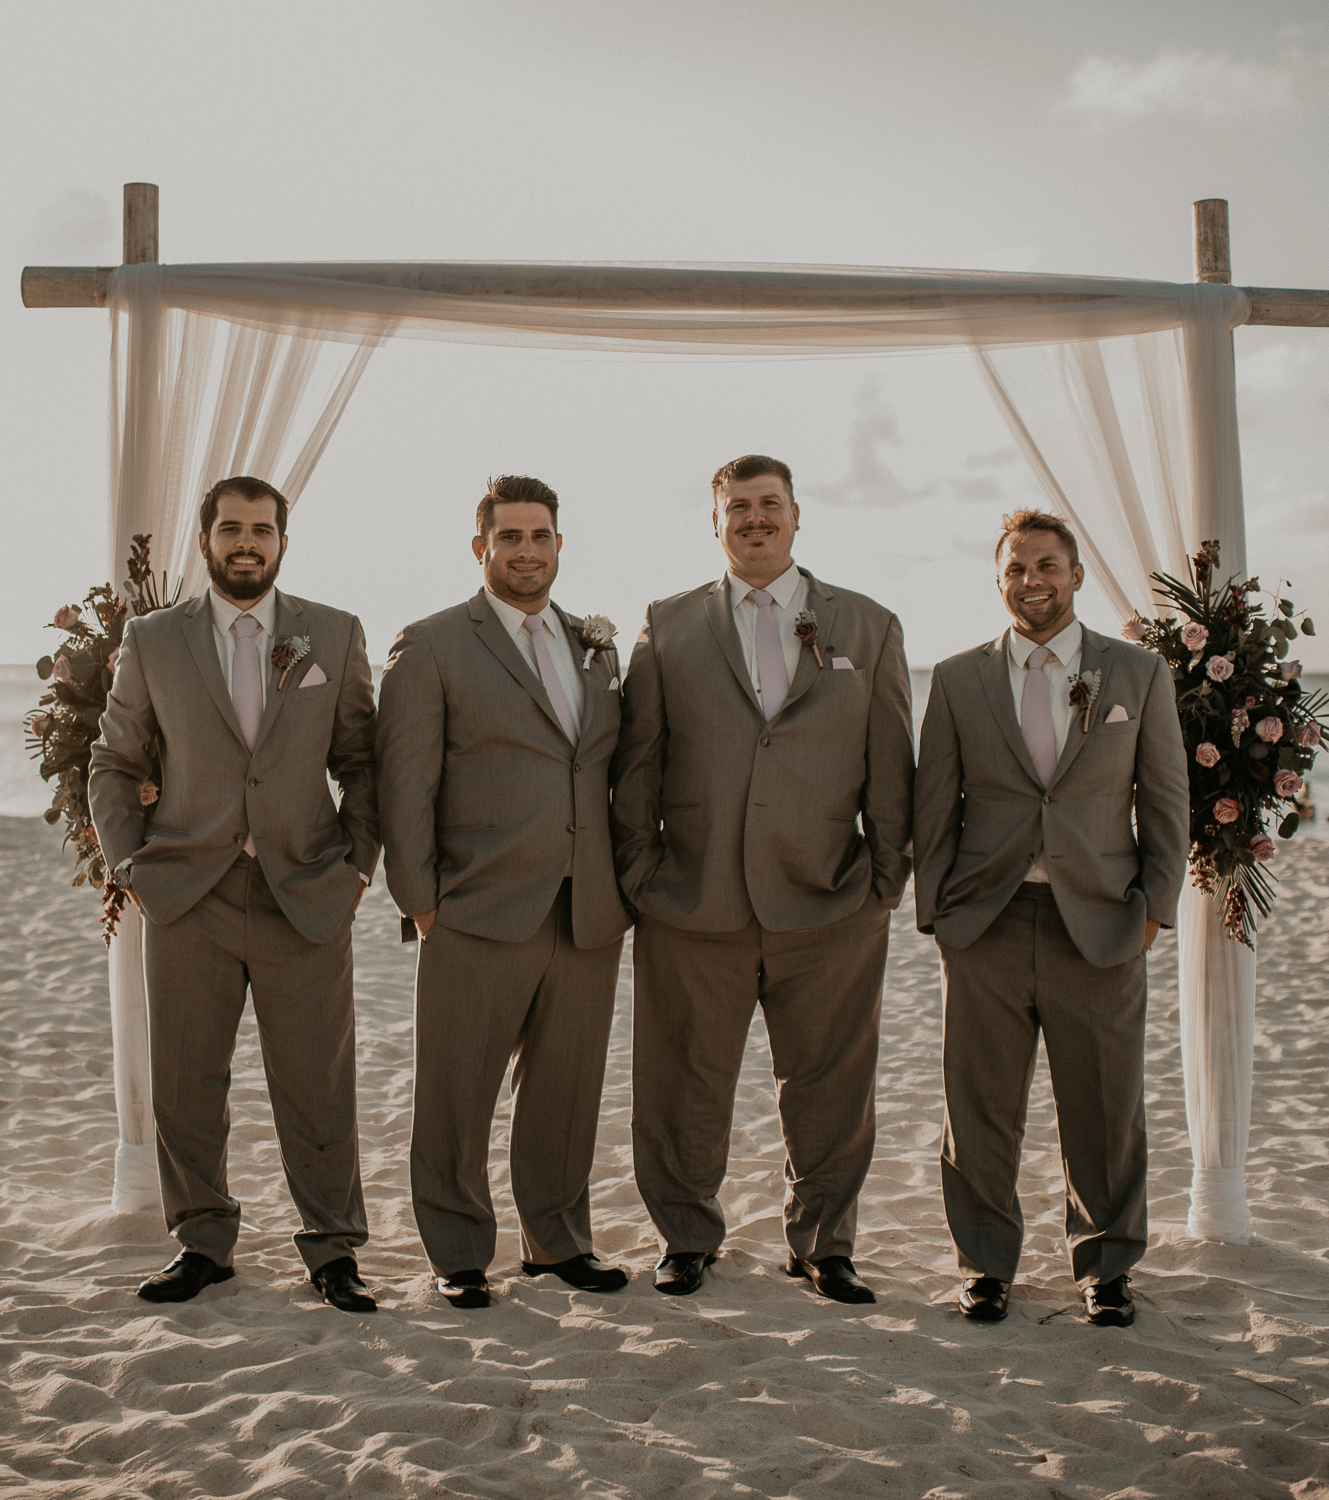 Groom and groomsmen photos on the beach from a destination Aruba Elopement wedding at Riu Palace